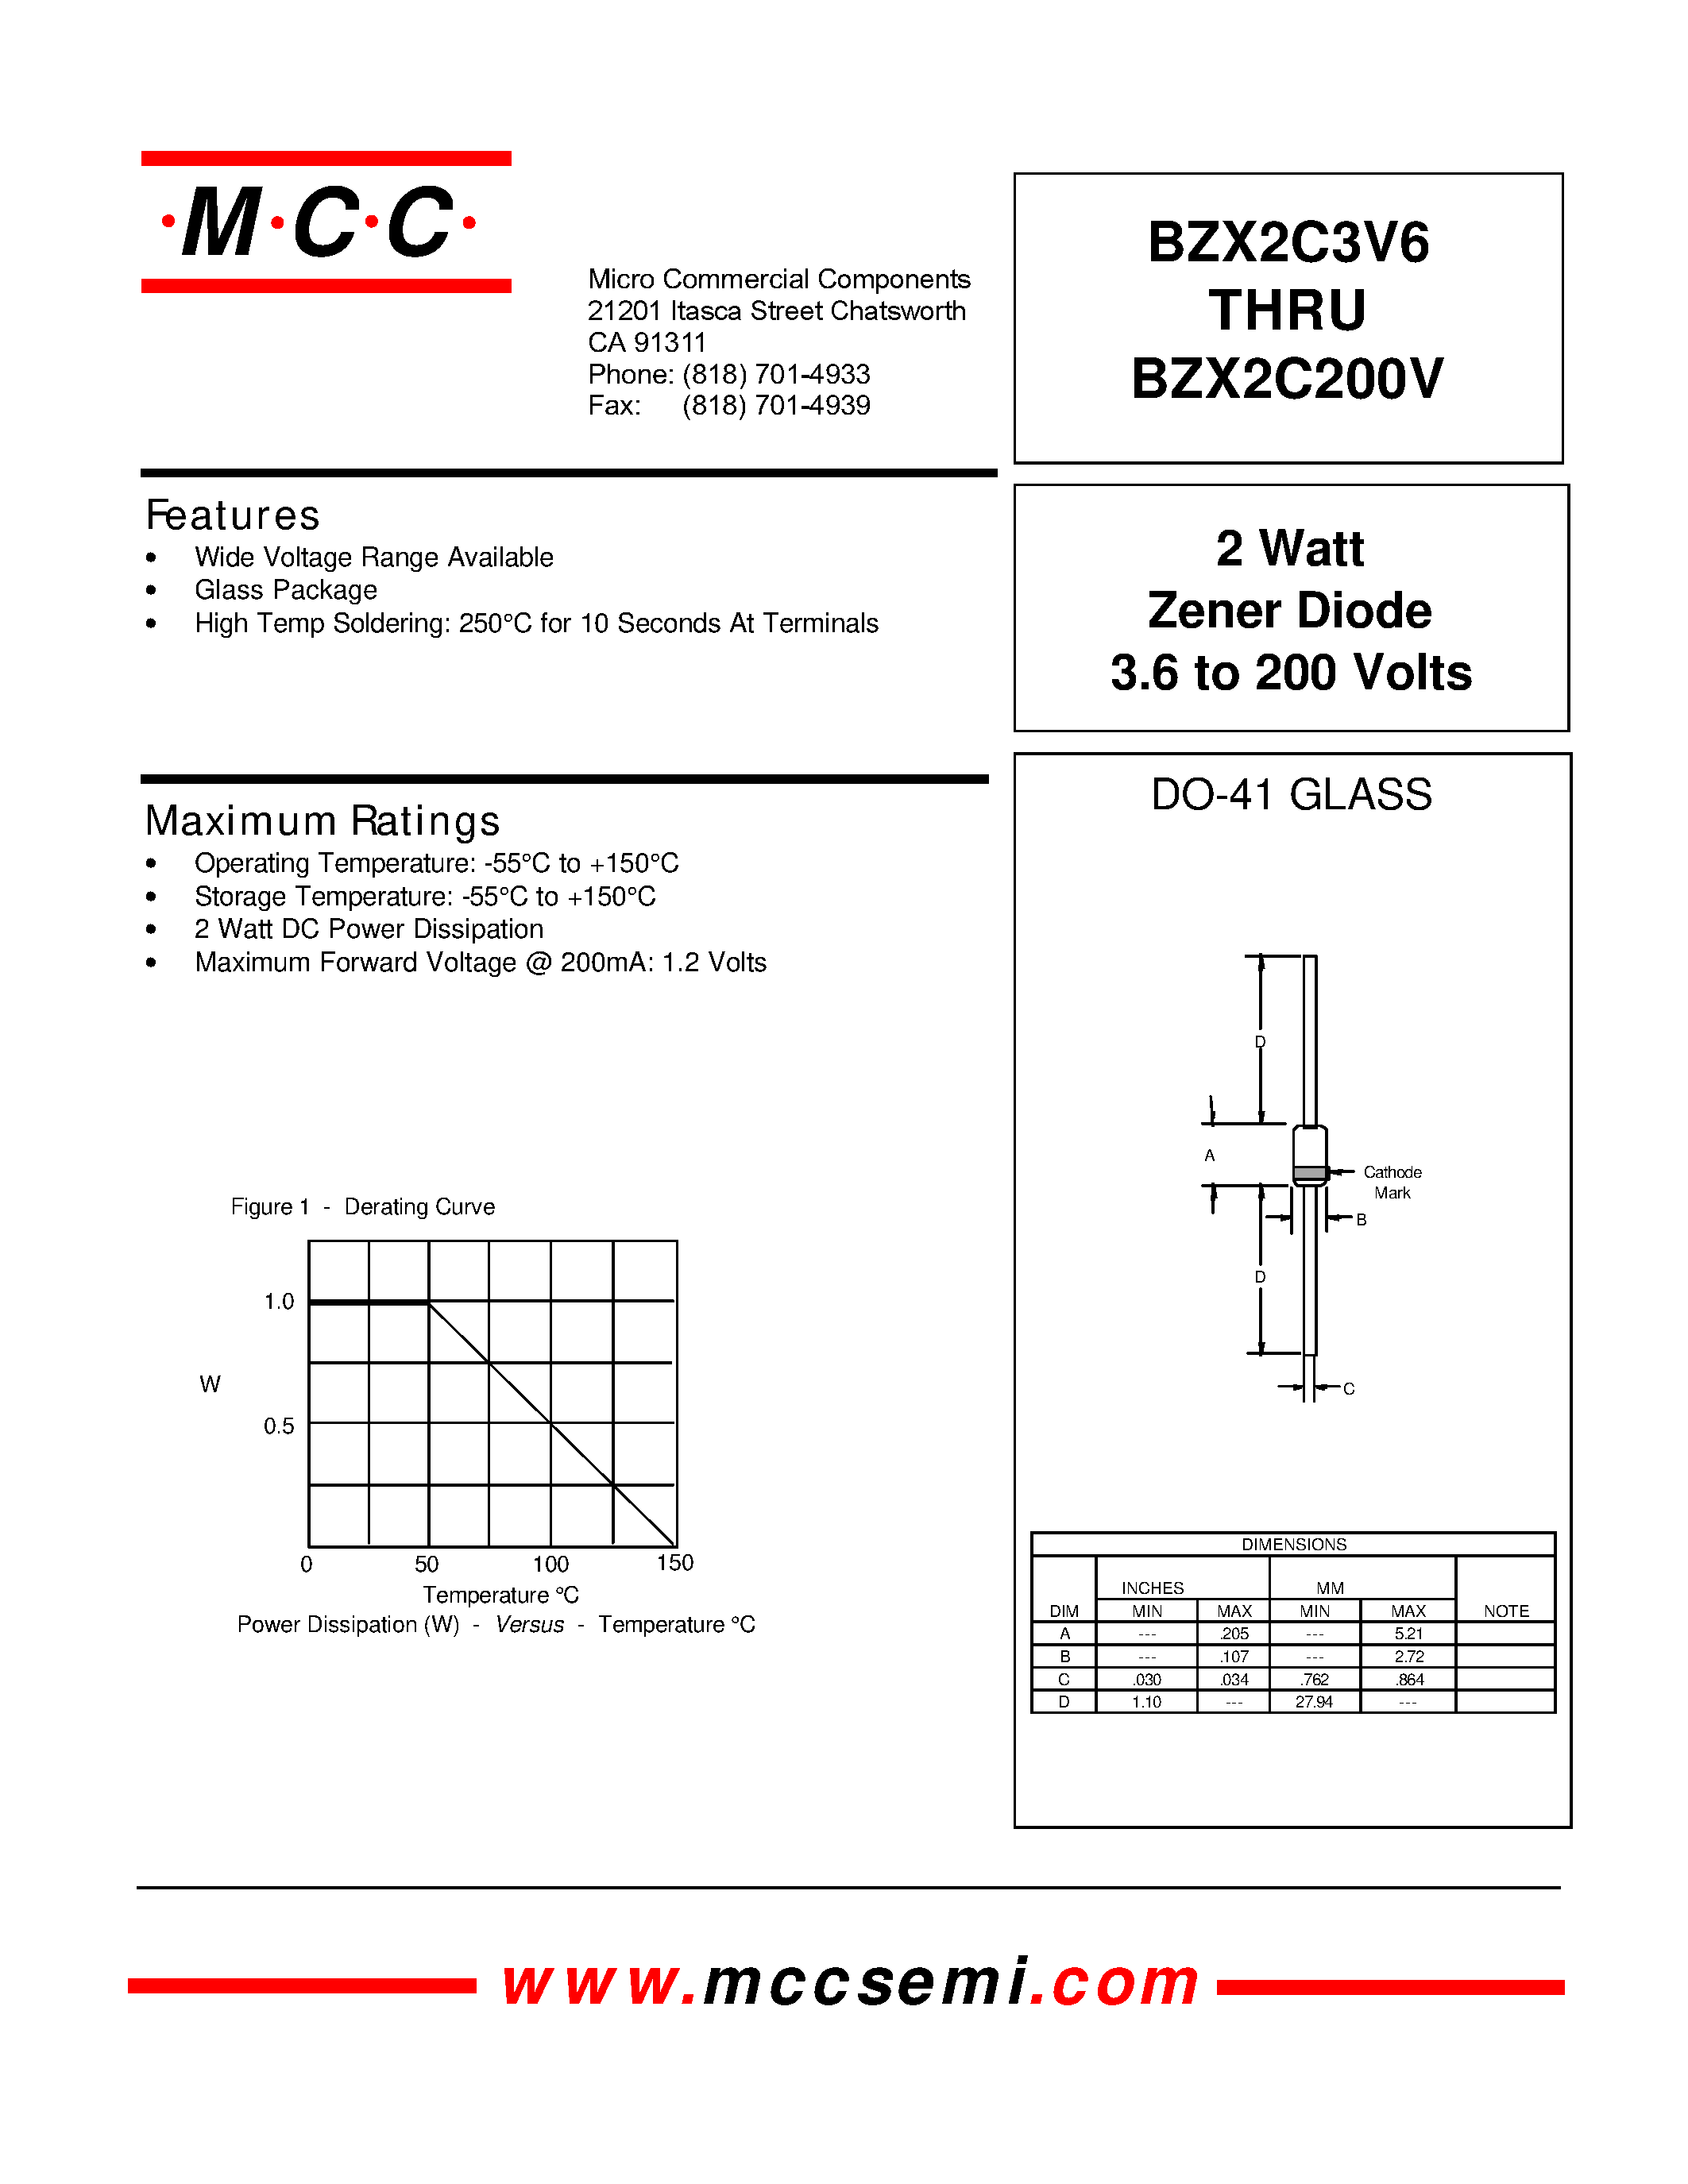 Даташит BZX2C75V - 2 Watt Zener Diode 3.6 to 200 Volts страница 1